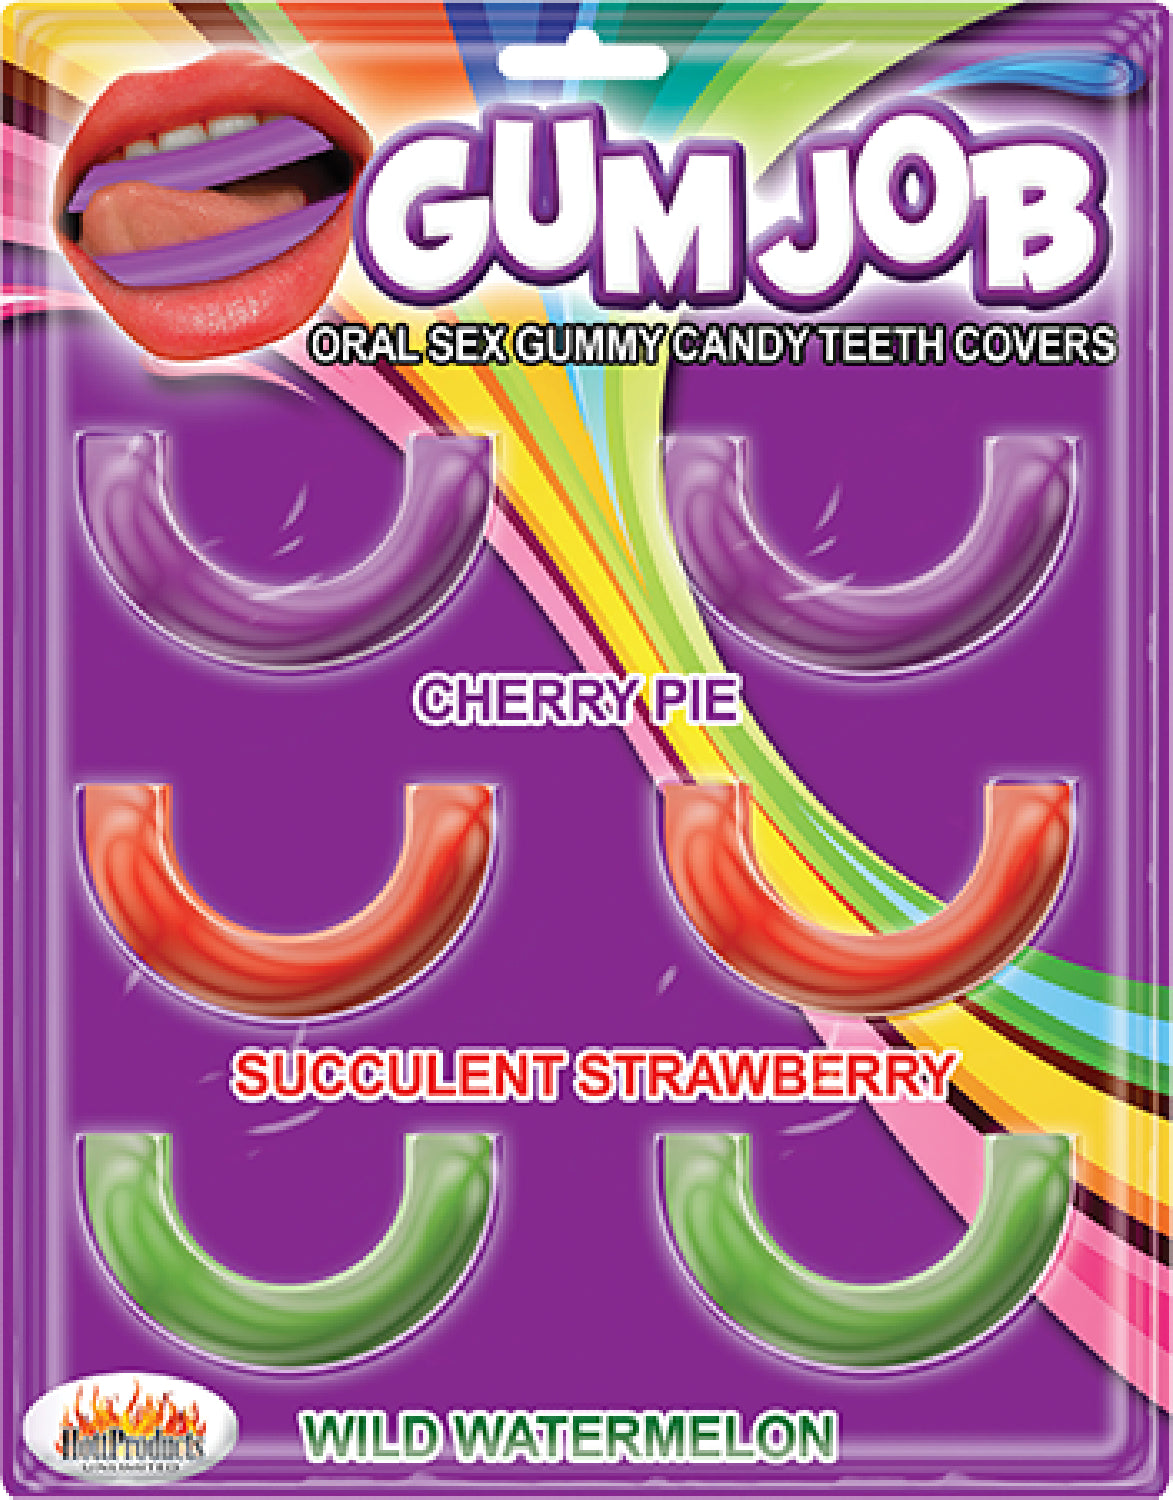 Gum Joboral Sex Candy Teeth Covers Erotic Nights 